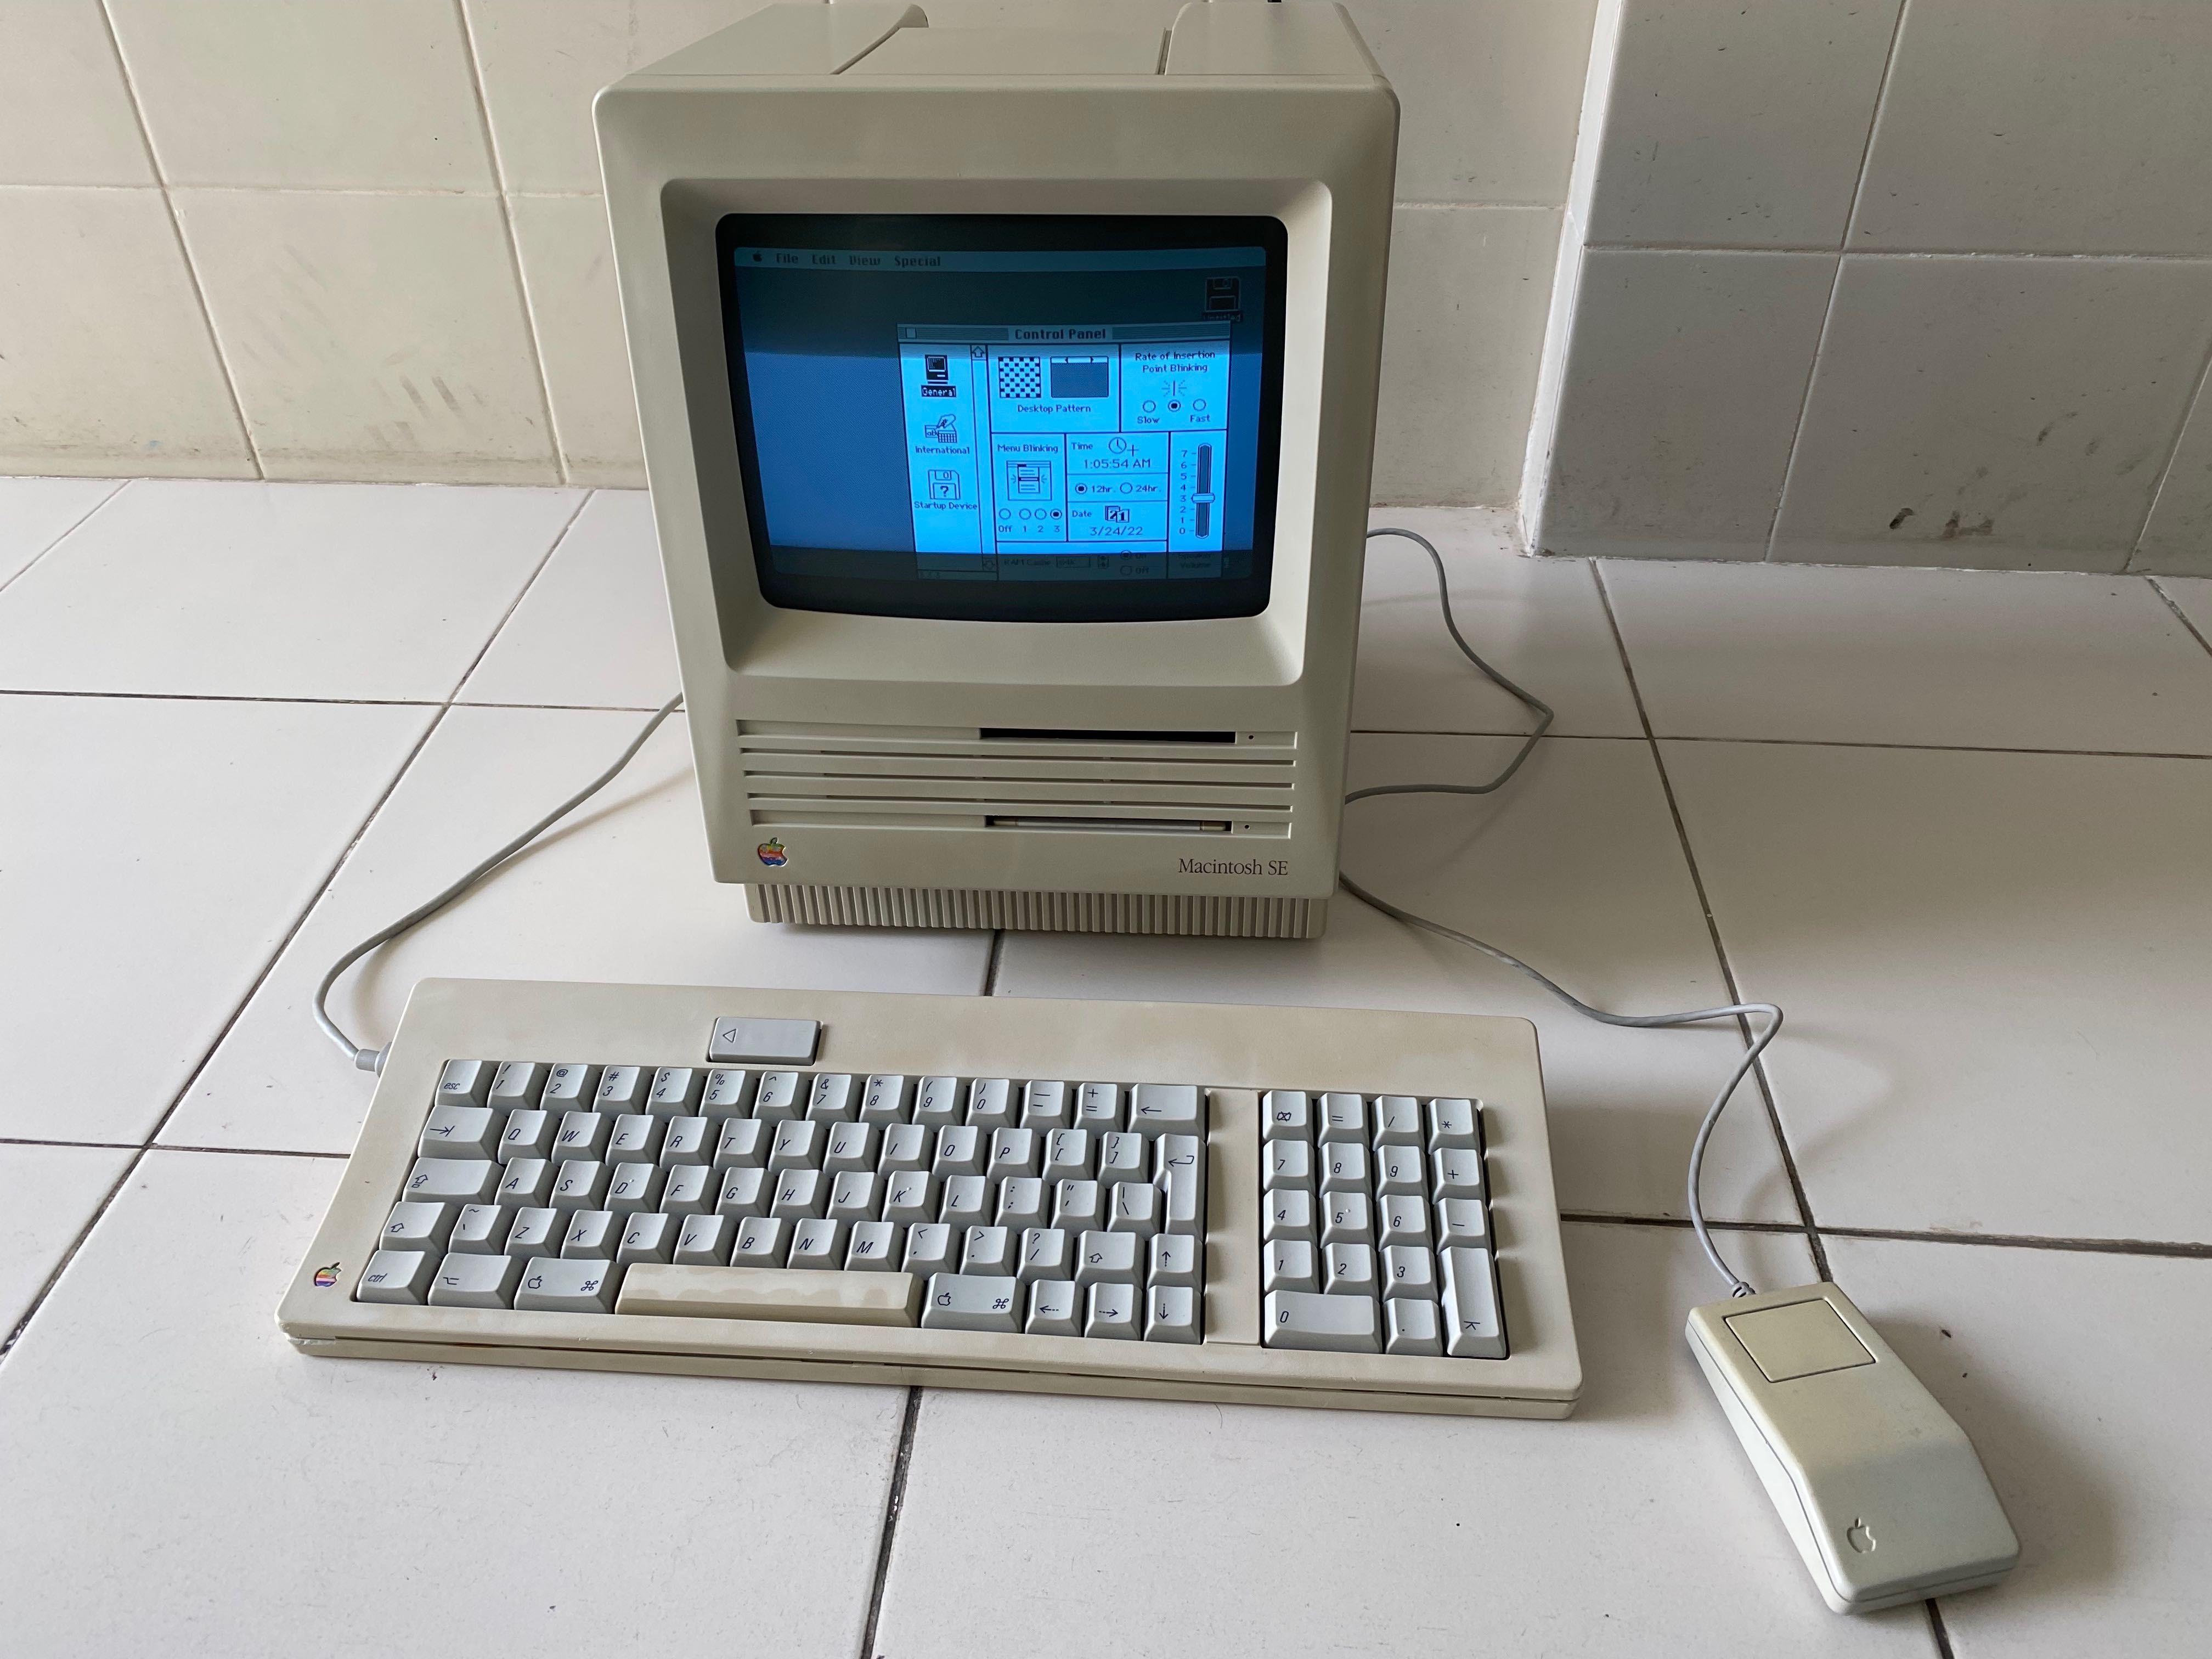 Apple Macintosh SE (M5010)